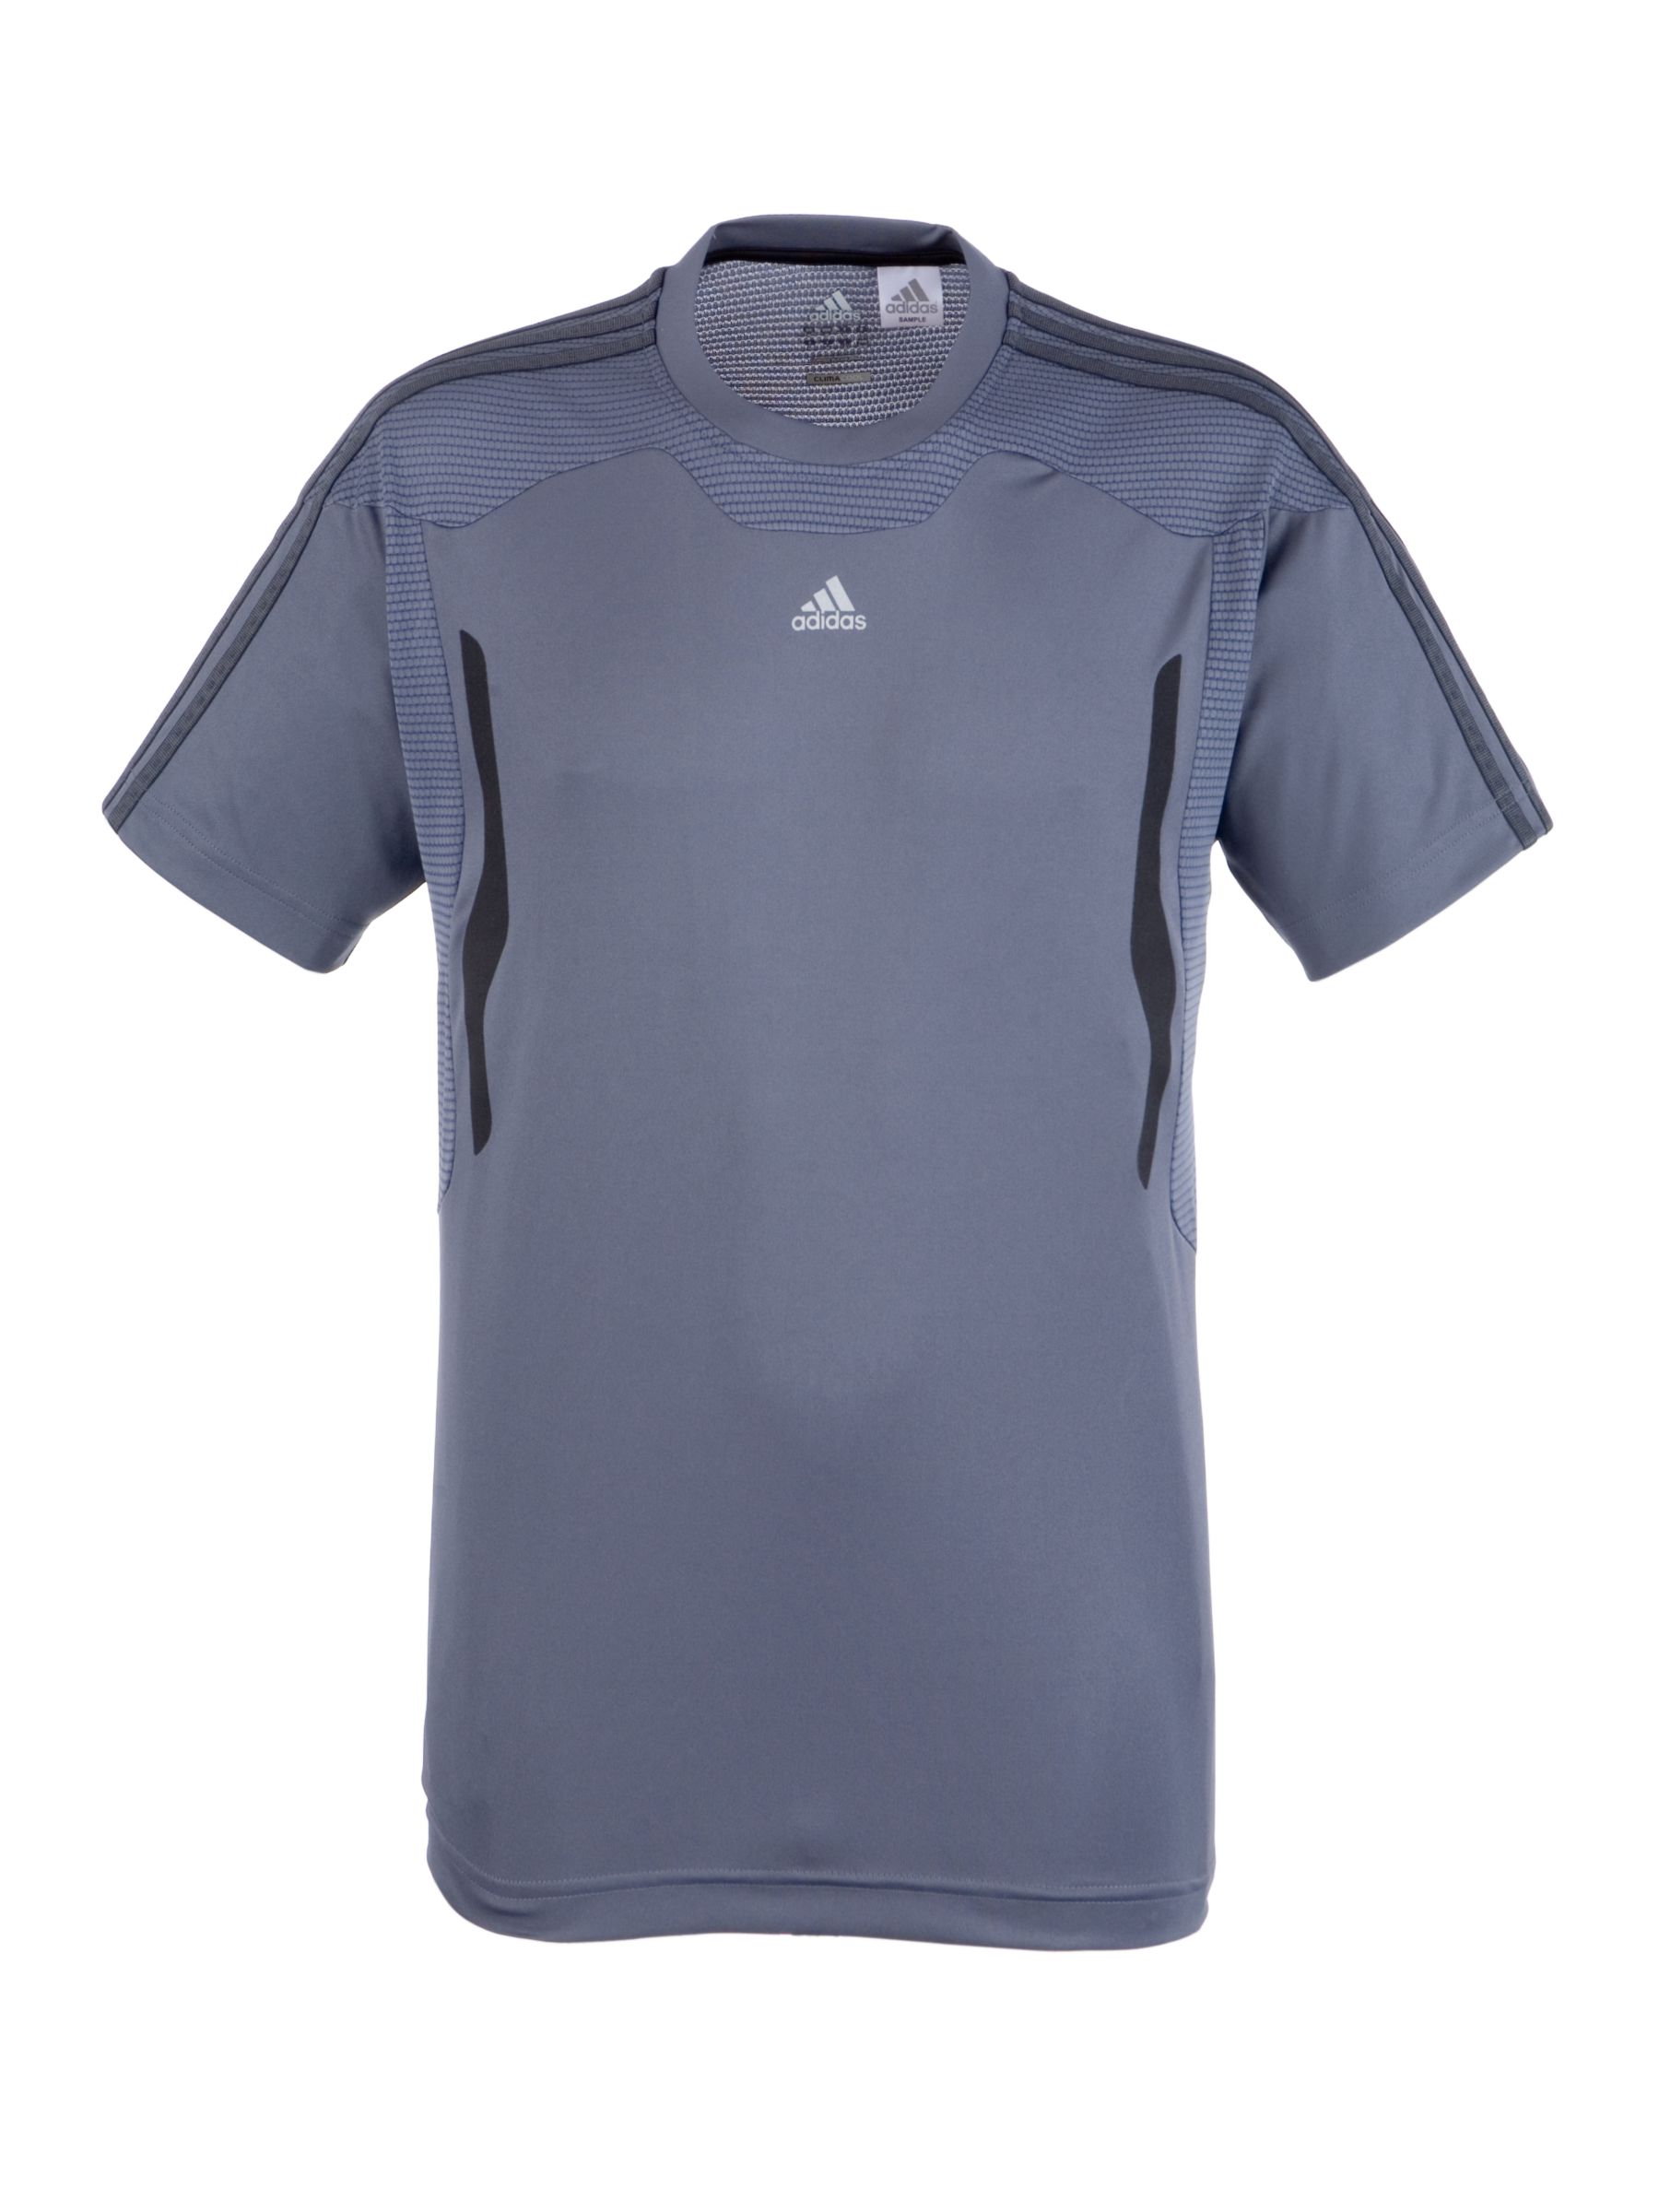 Adidas Clima 365 Short Sleeve T-Shirt, Navy